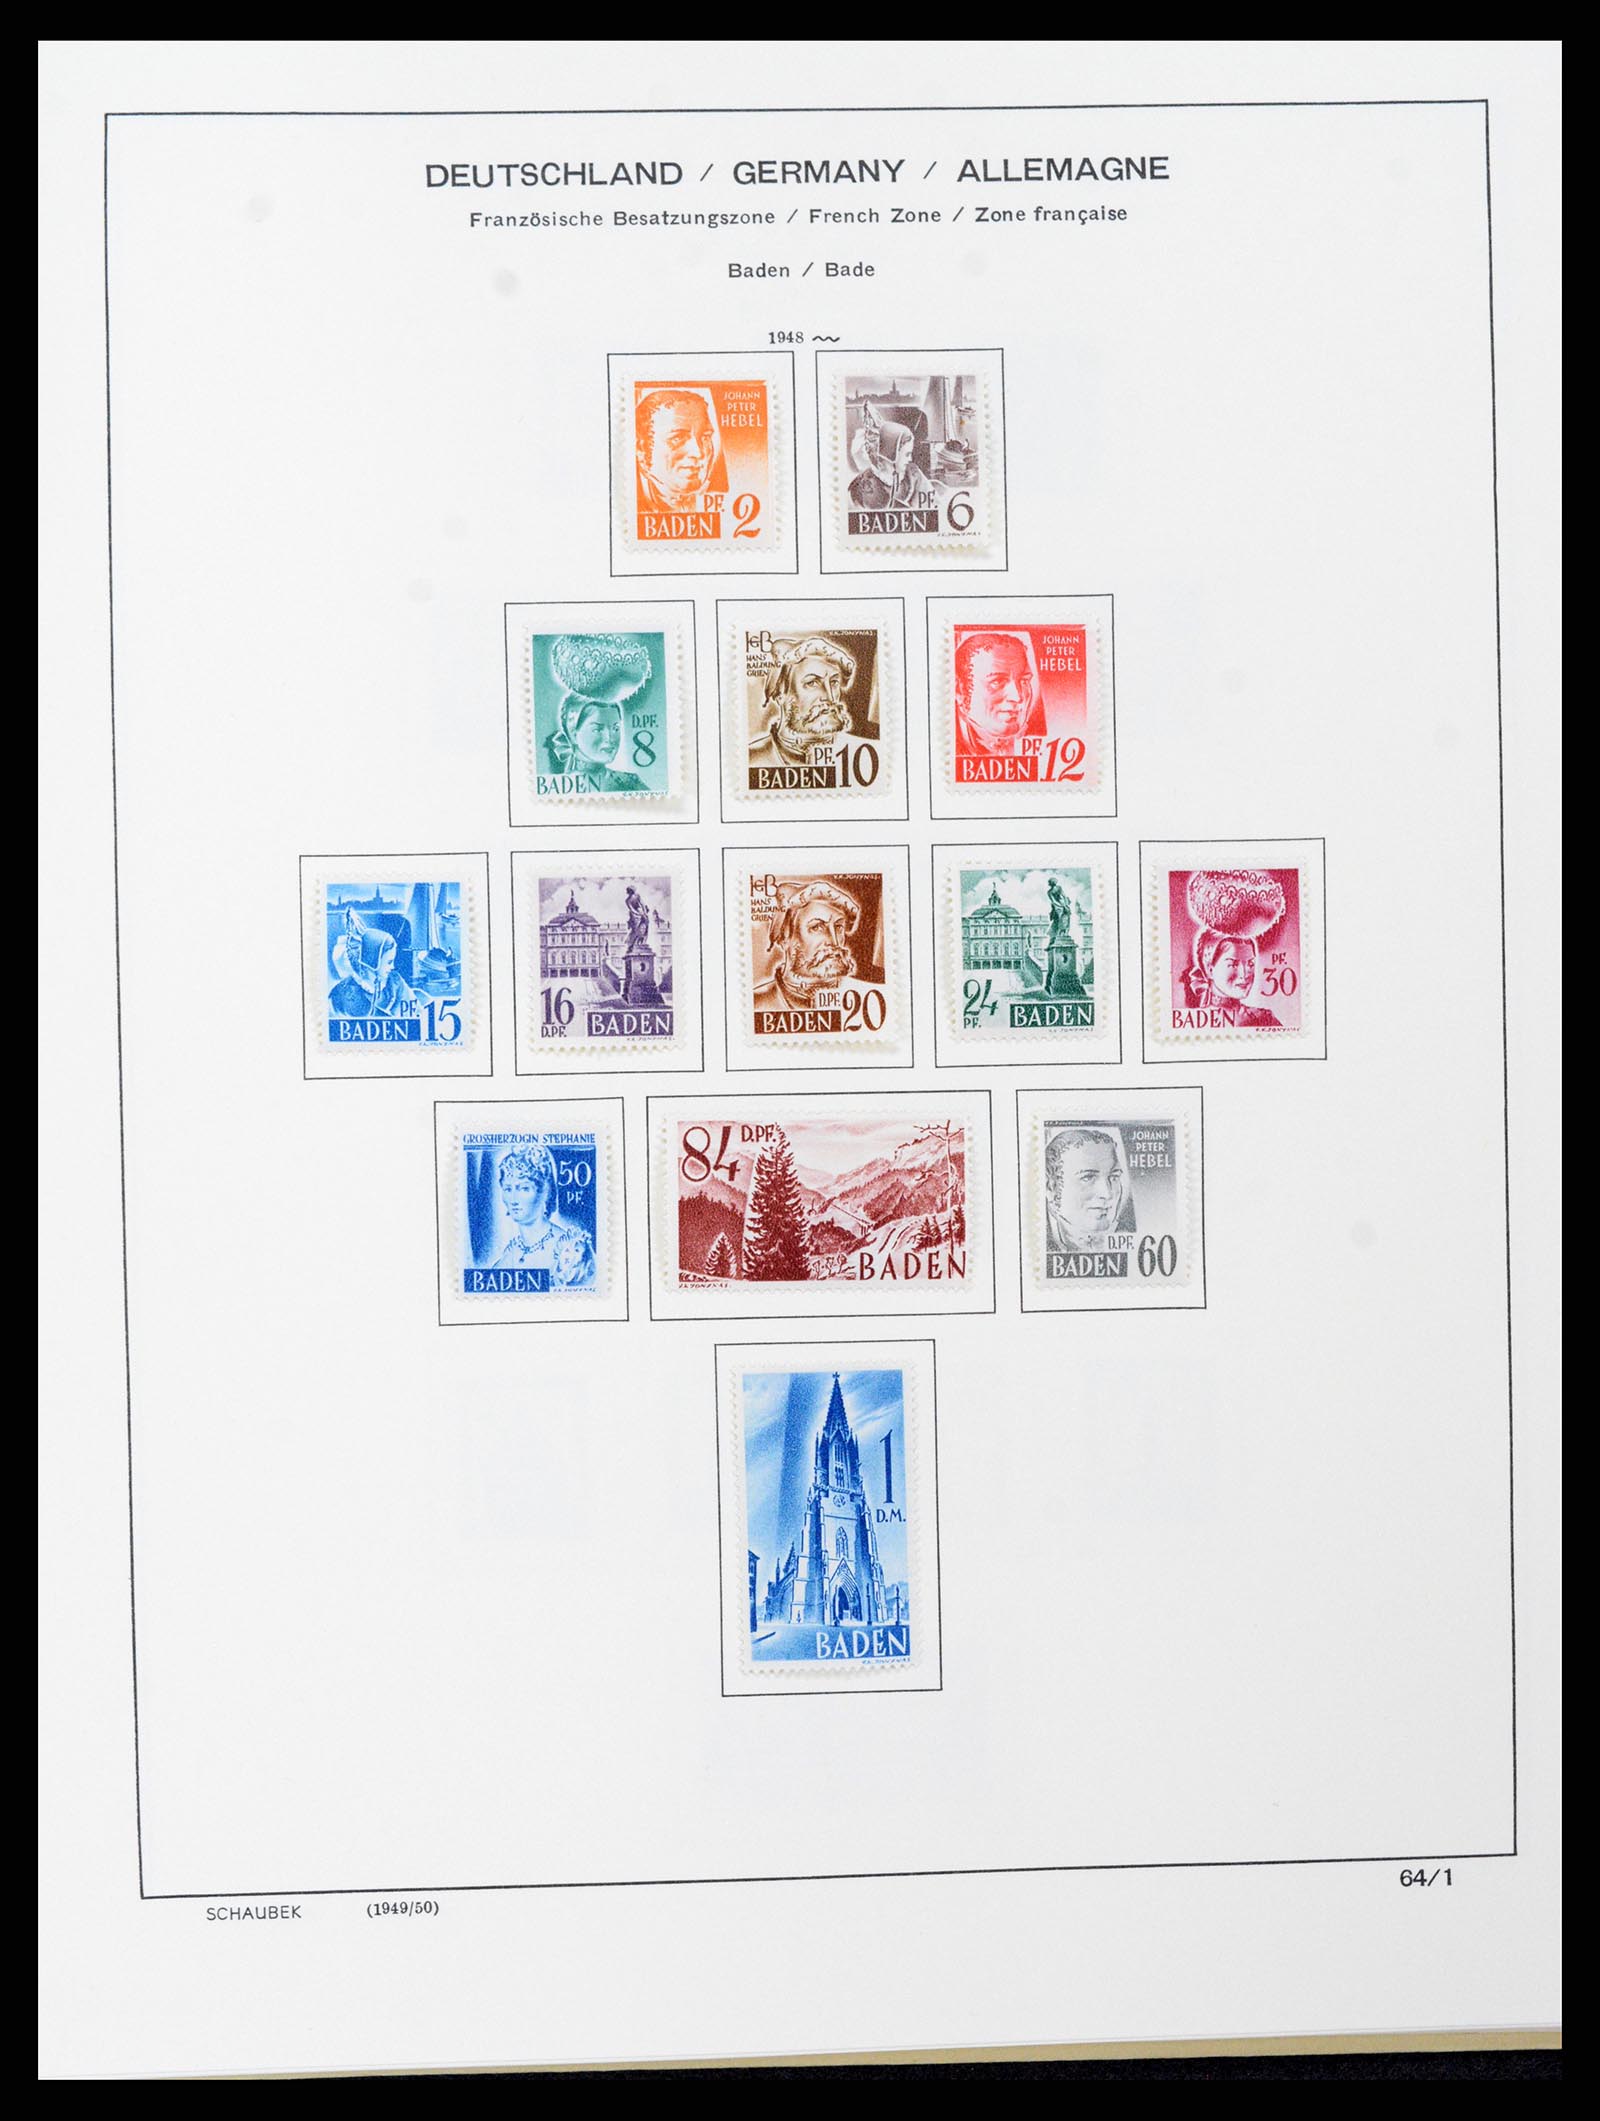 37645 059 - Stamp collection 37645 German Zones 1945-1949.